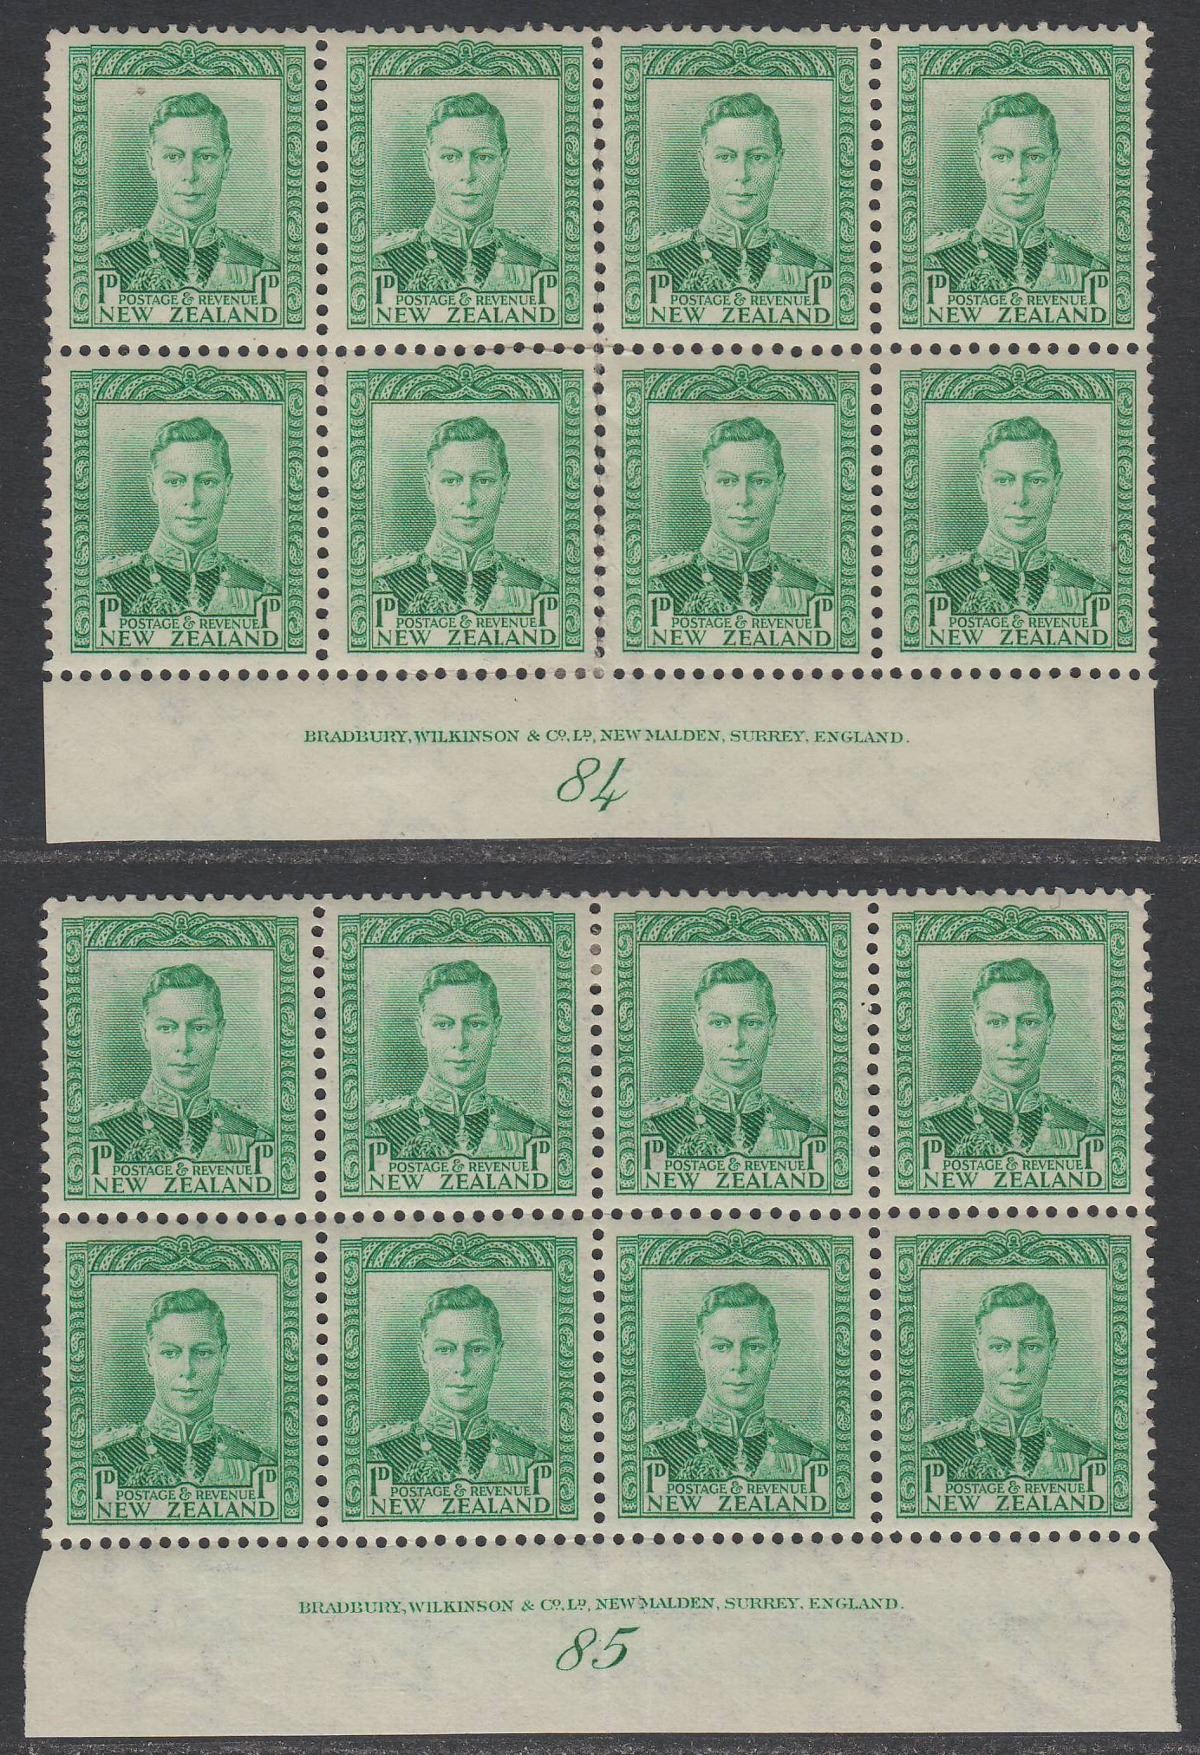 New Zealand 1941 KGVI 1d Green Plates 84, 85 Imprint Blocks of 8 Mint SG606